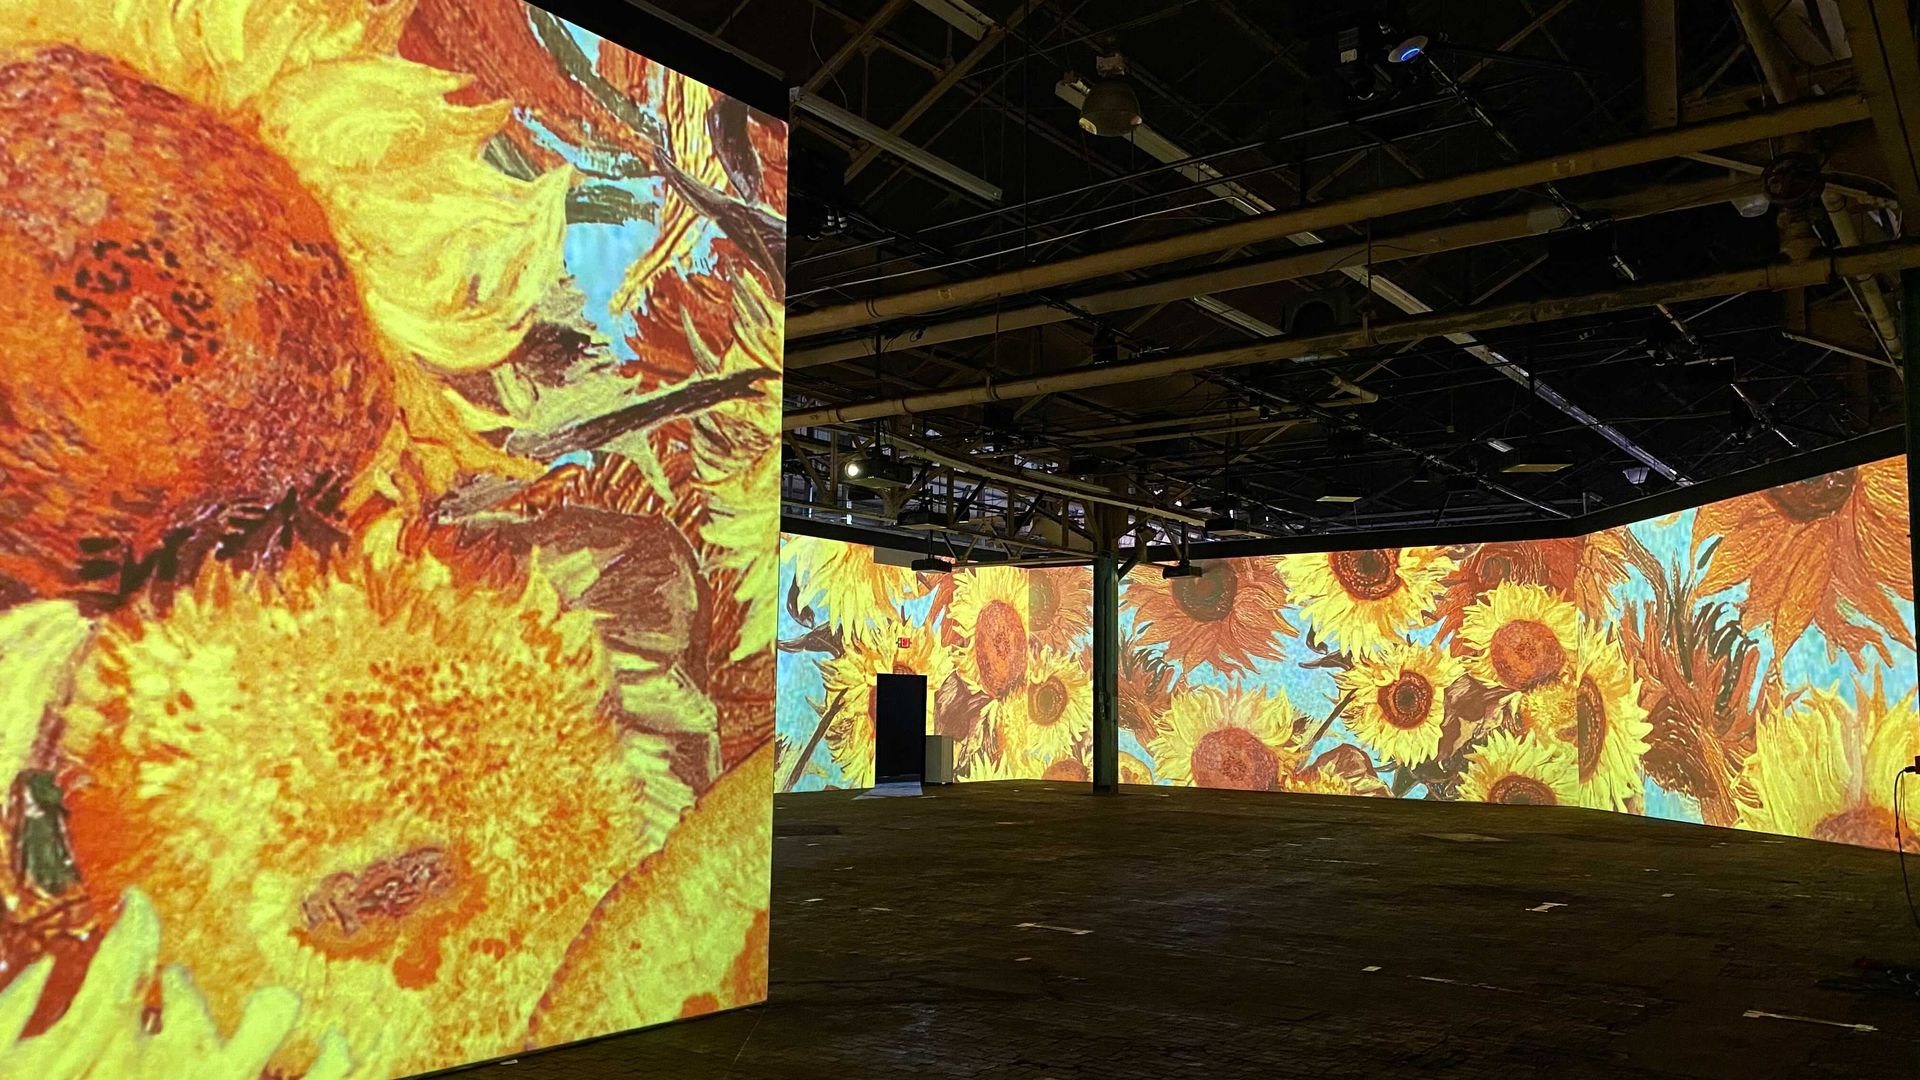 image from the immersive Van Gogh exhibit